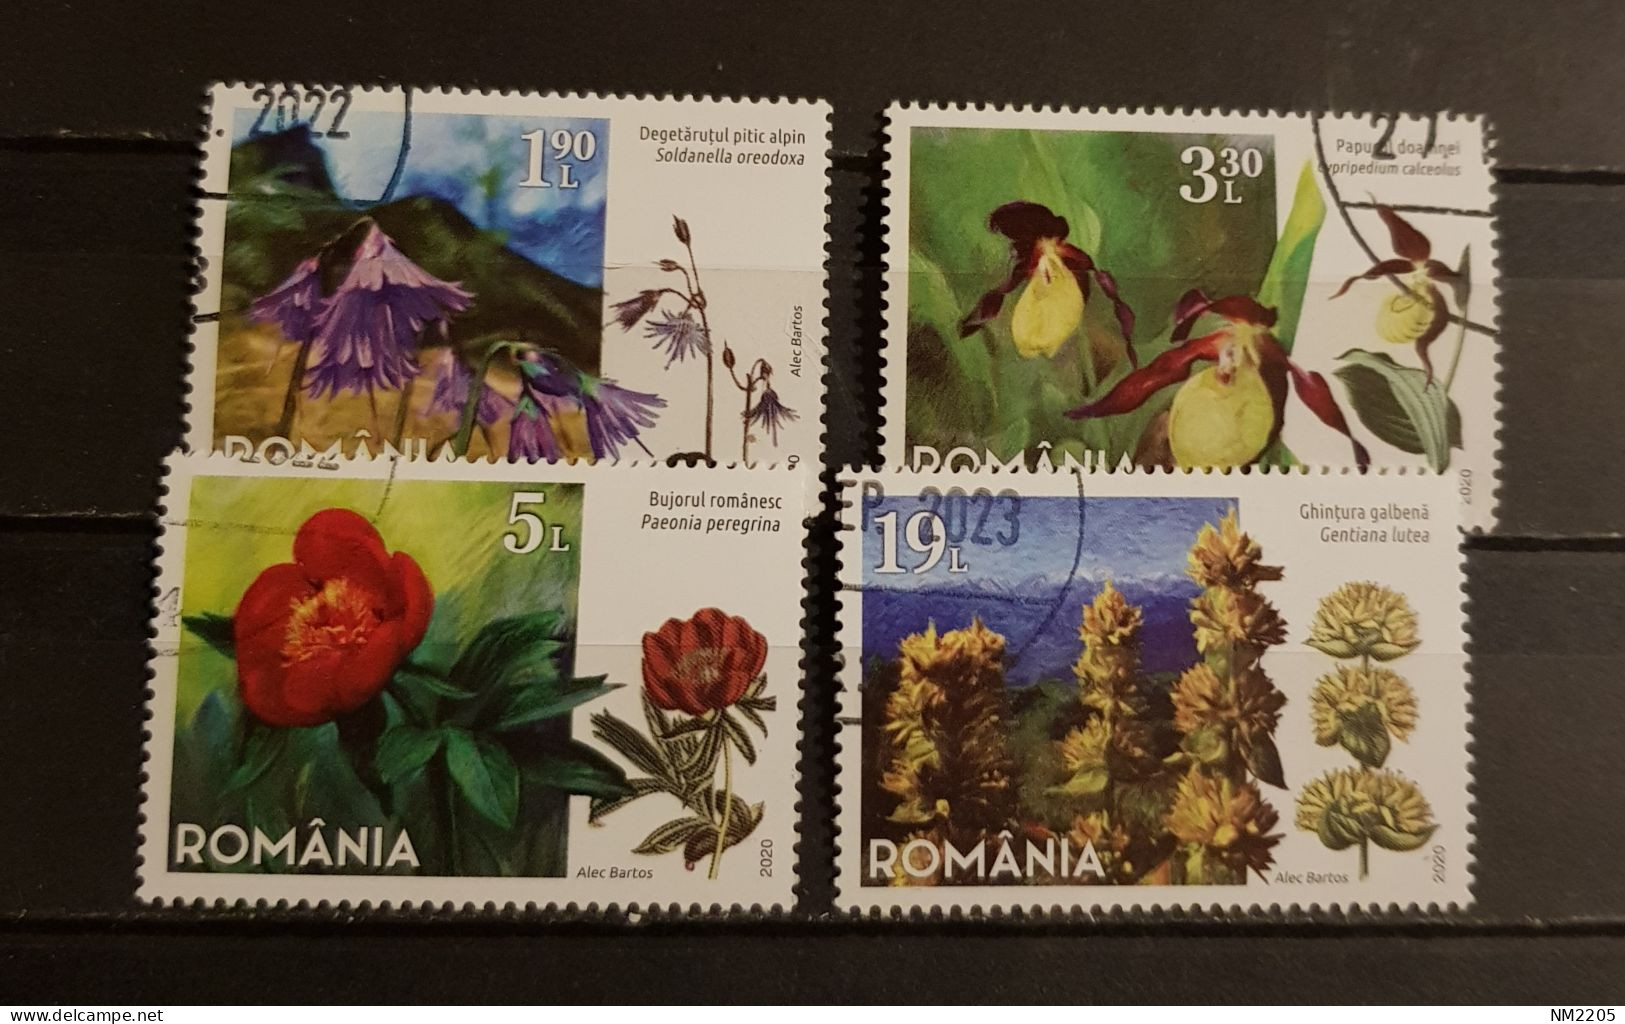 ROMANIA PLANTS GENTIANA LUTEA& PAEONIA PEREGRINA& SOLDANELLA OREODOXA SET CTO-USED - Used Stamps